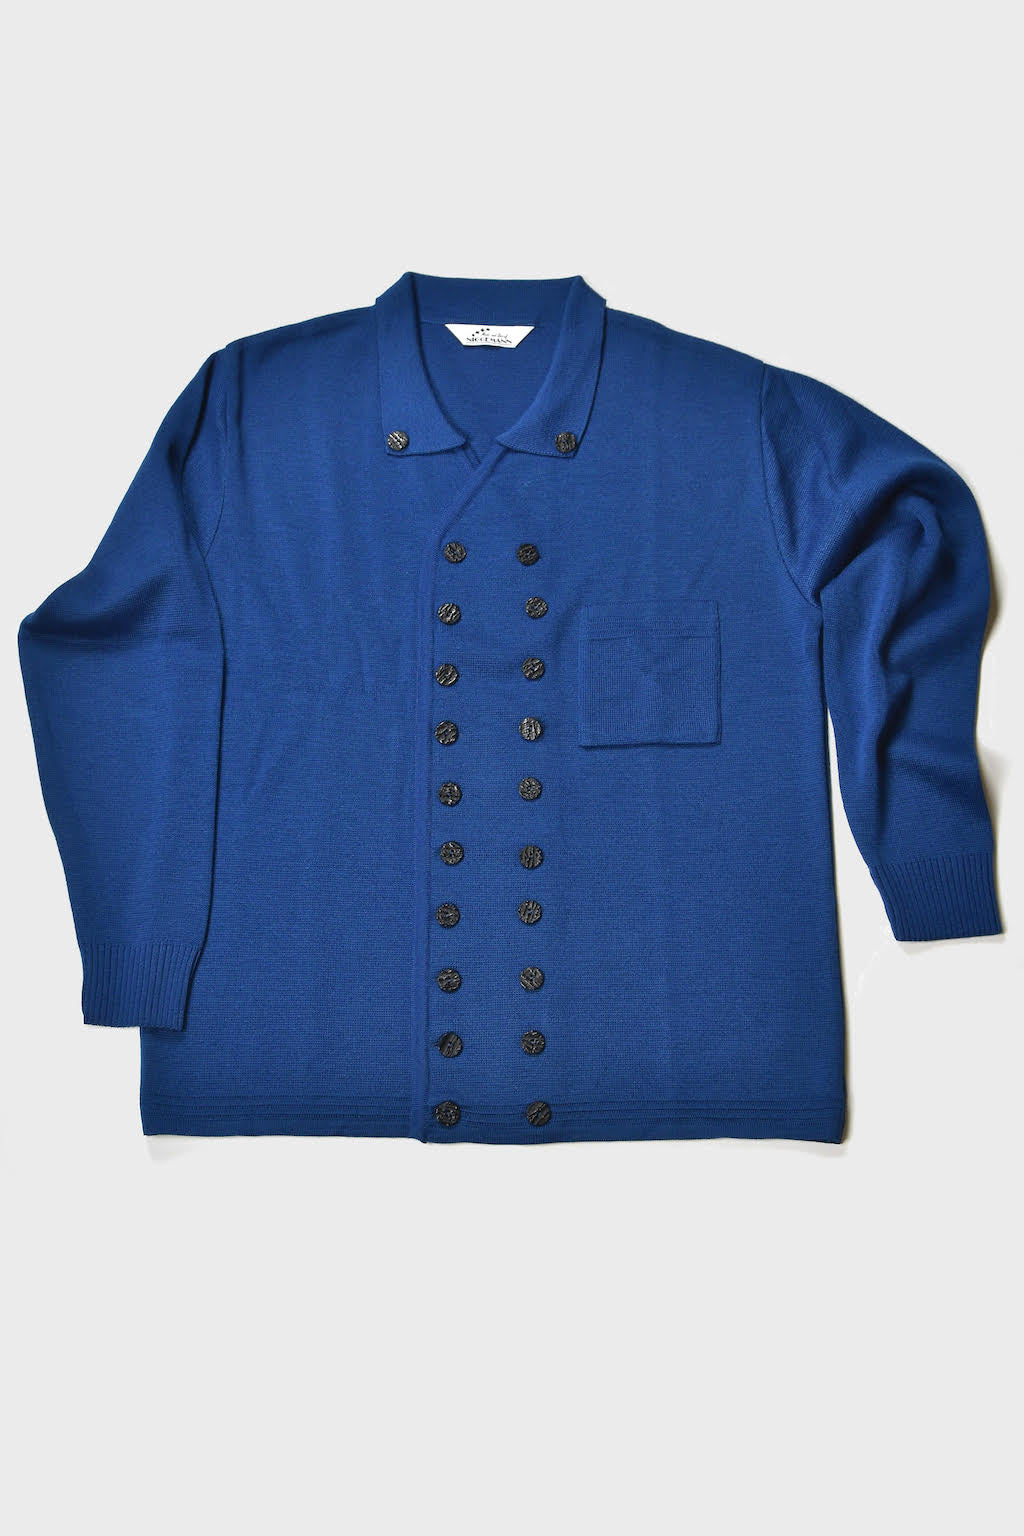 NIGGEMANN ORIGINAL KÖBES-Jacke Farbe AZURBLAU 80